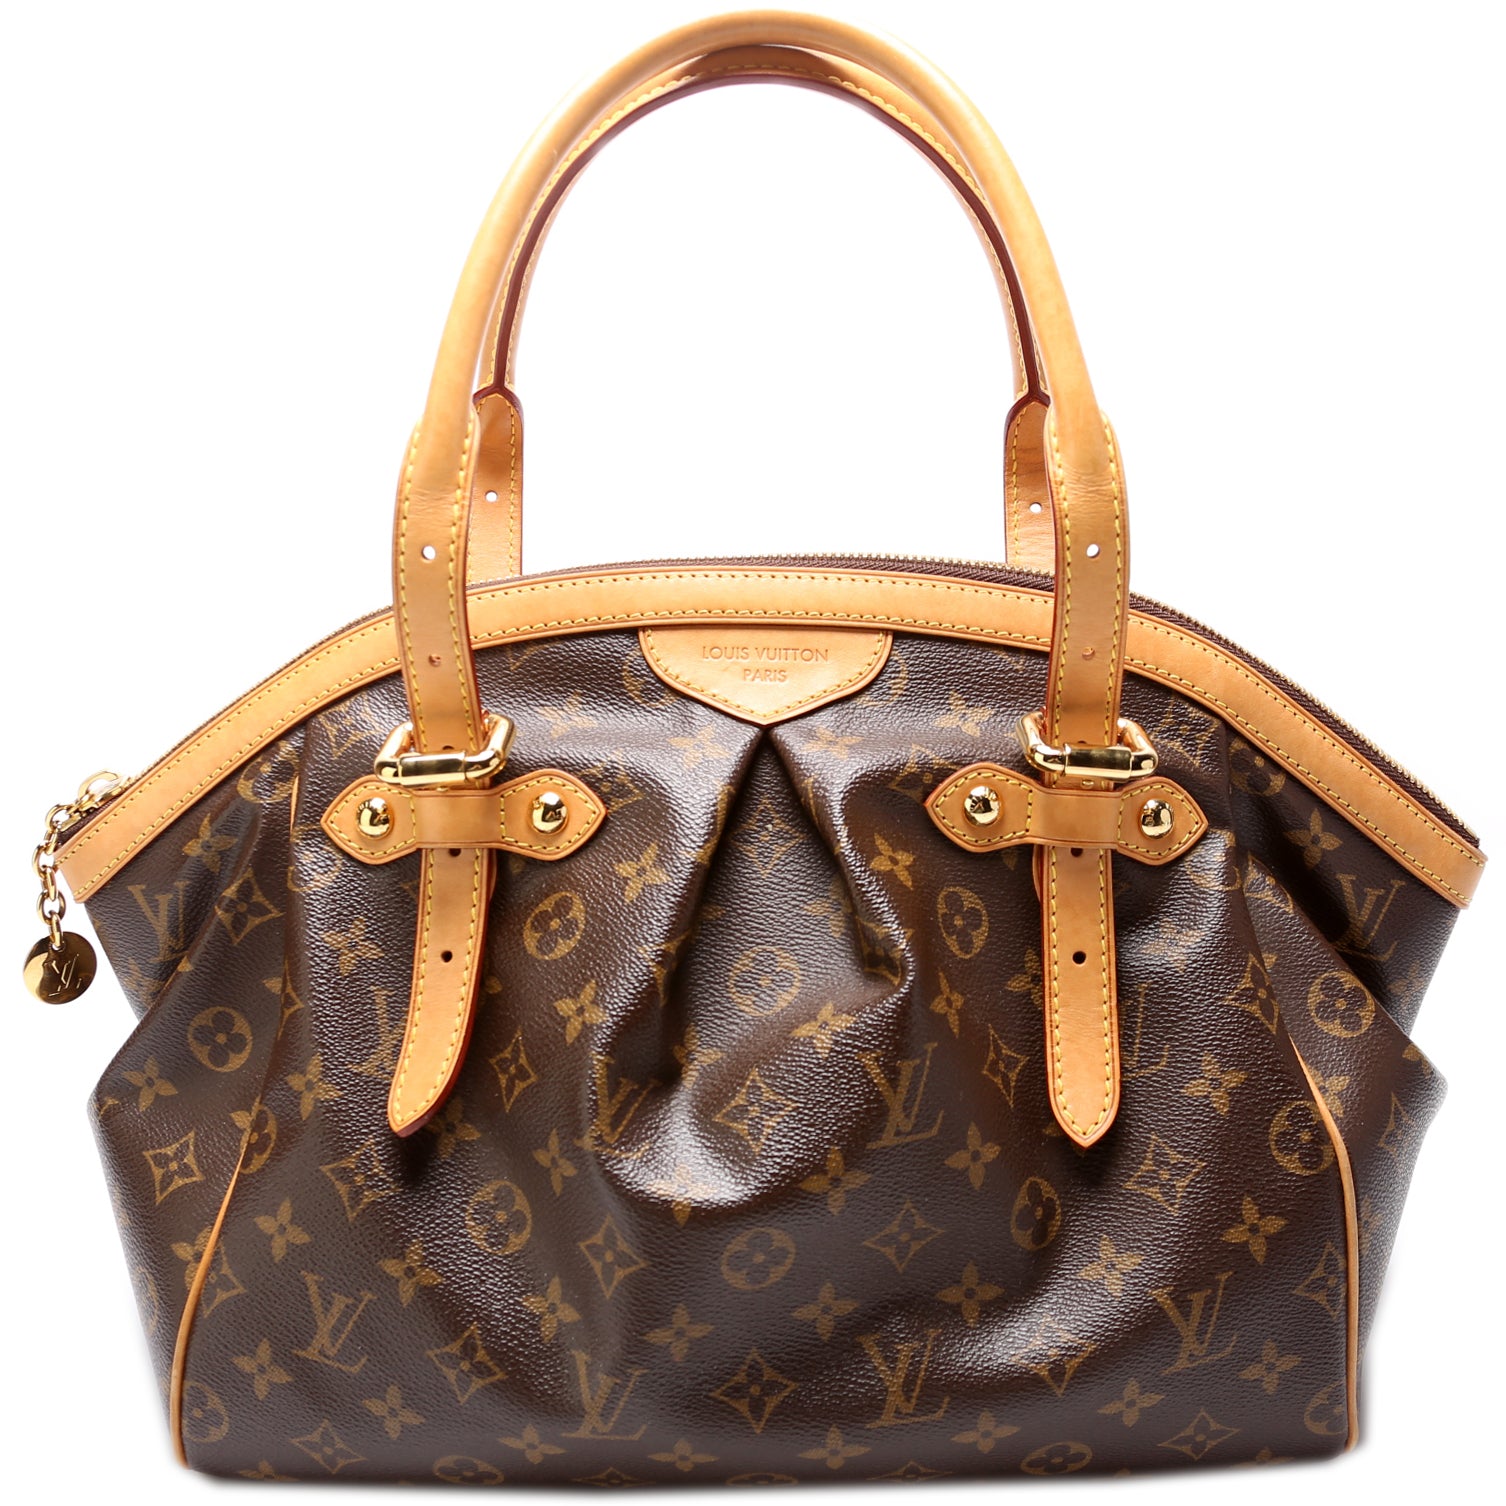 Louis Vuitton Authenticated Tivoli Handbag